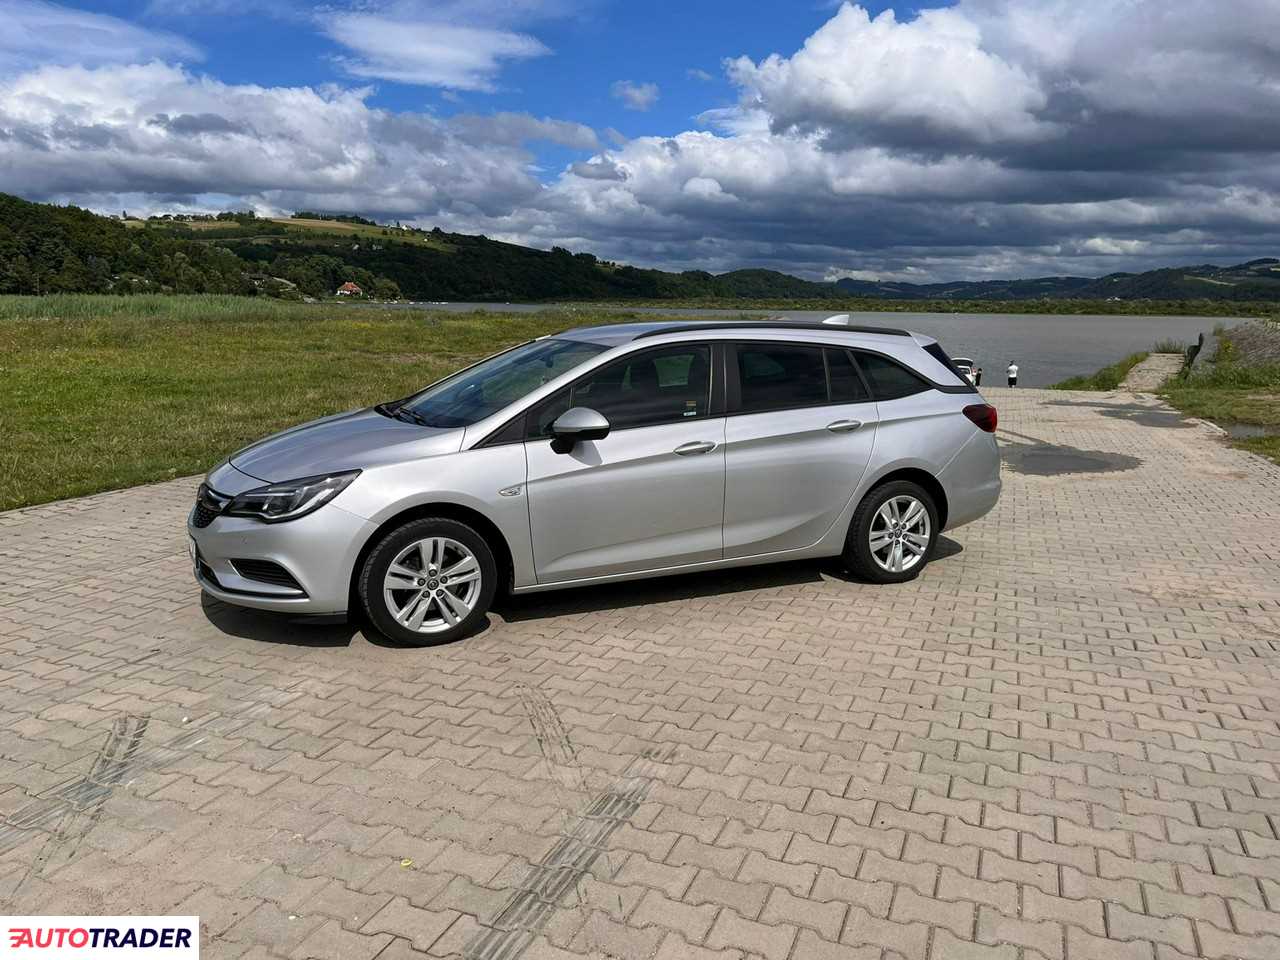 Opel Astra 2017 1.4 150 KM